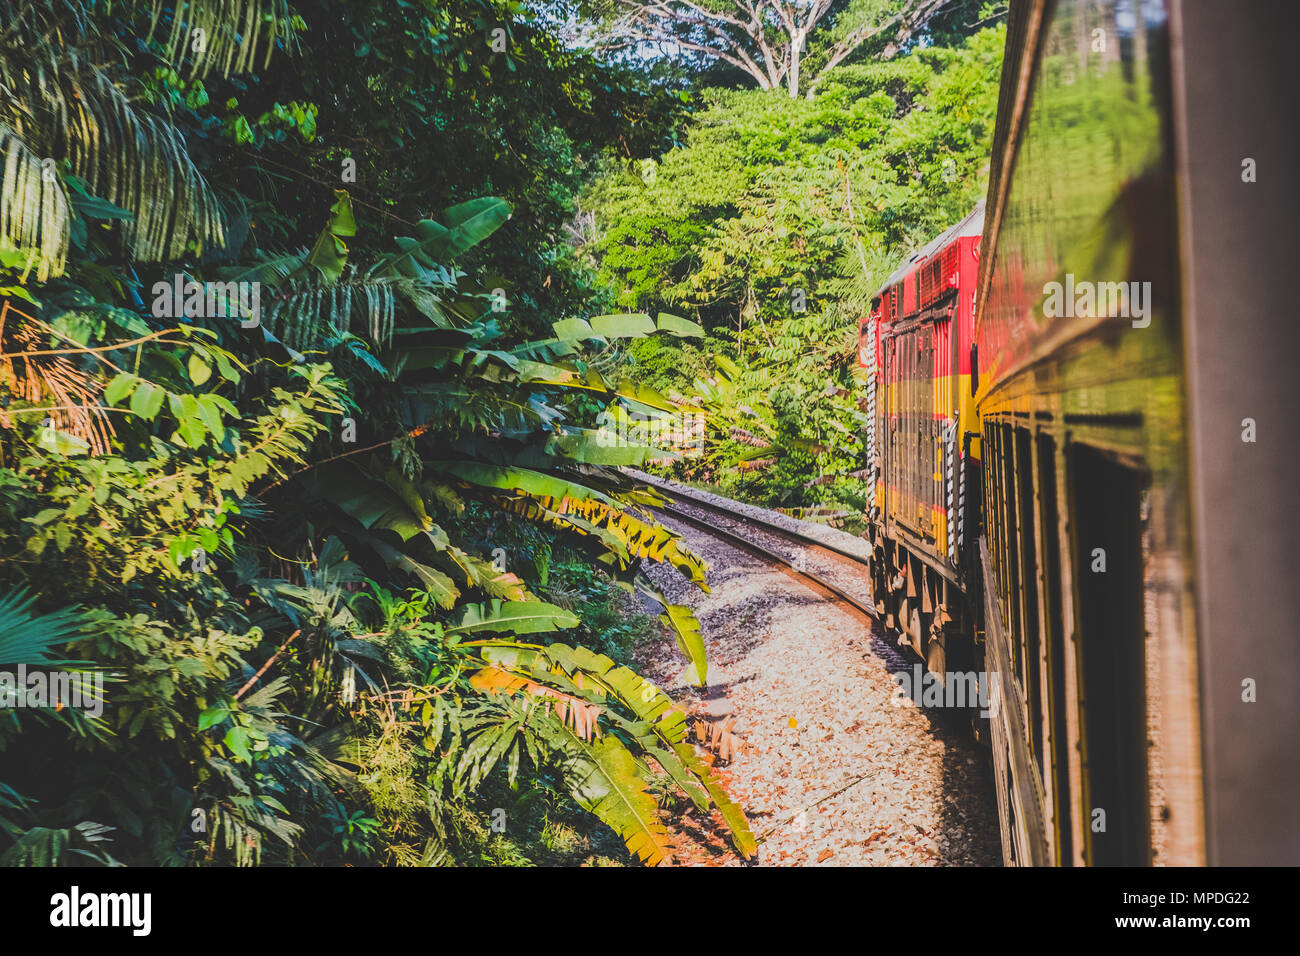 Panama City, Panama - march 2018:  The Panama Canal Railroad train driving from Panama City to Colon Stock Photo